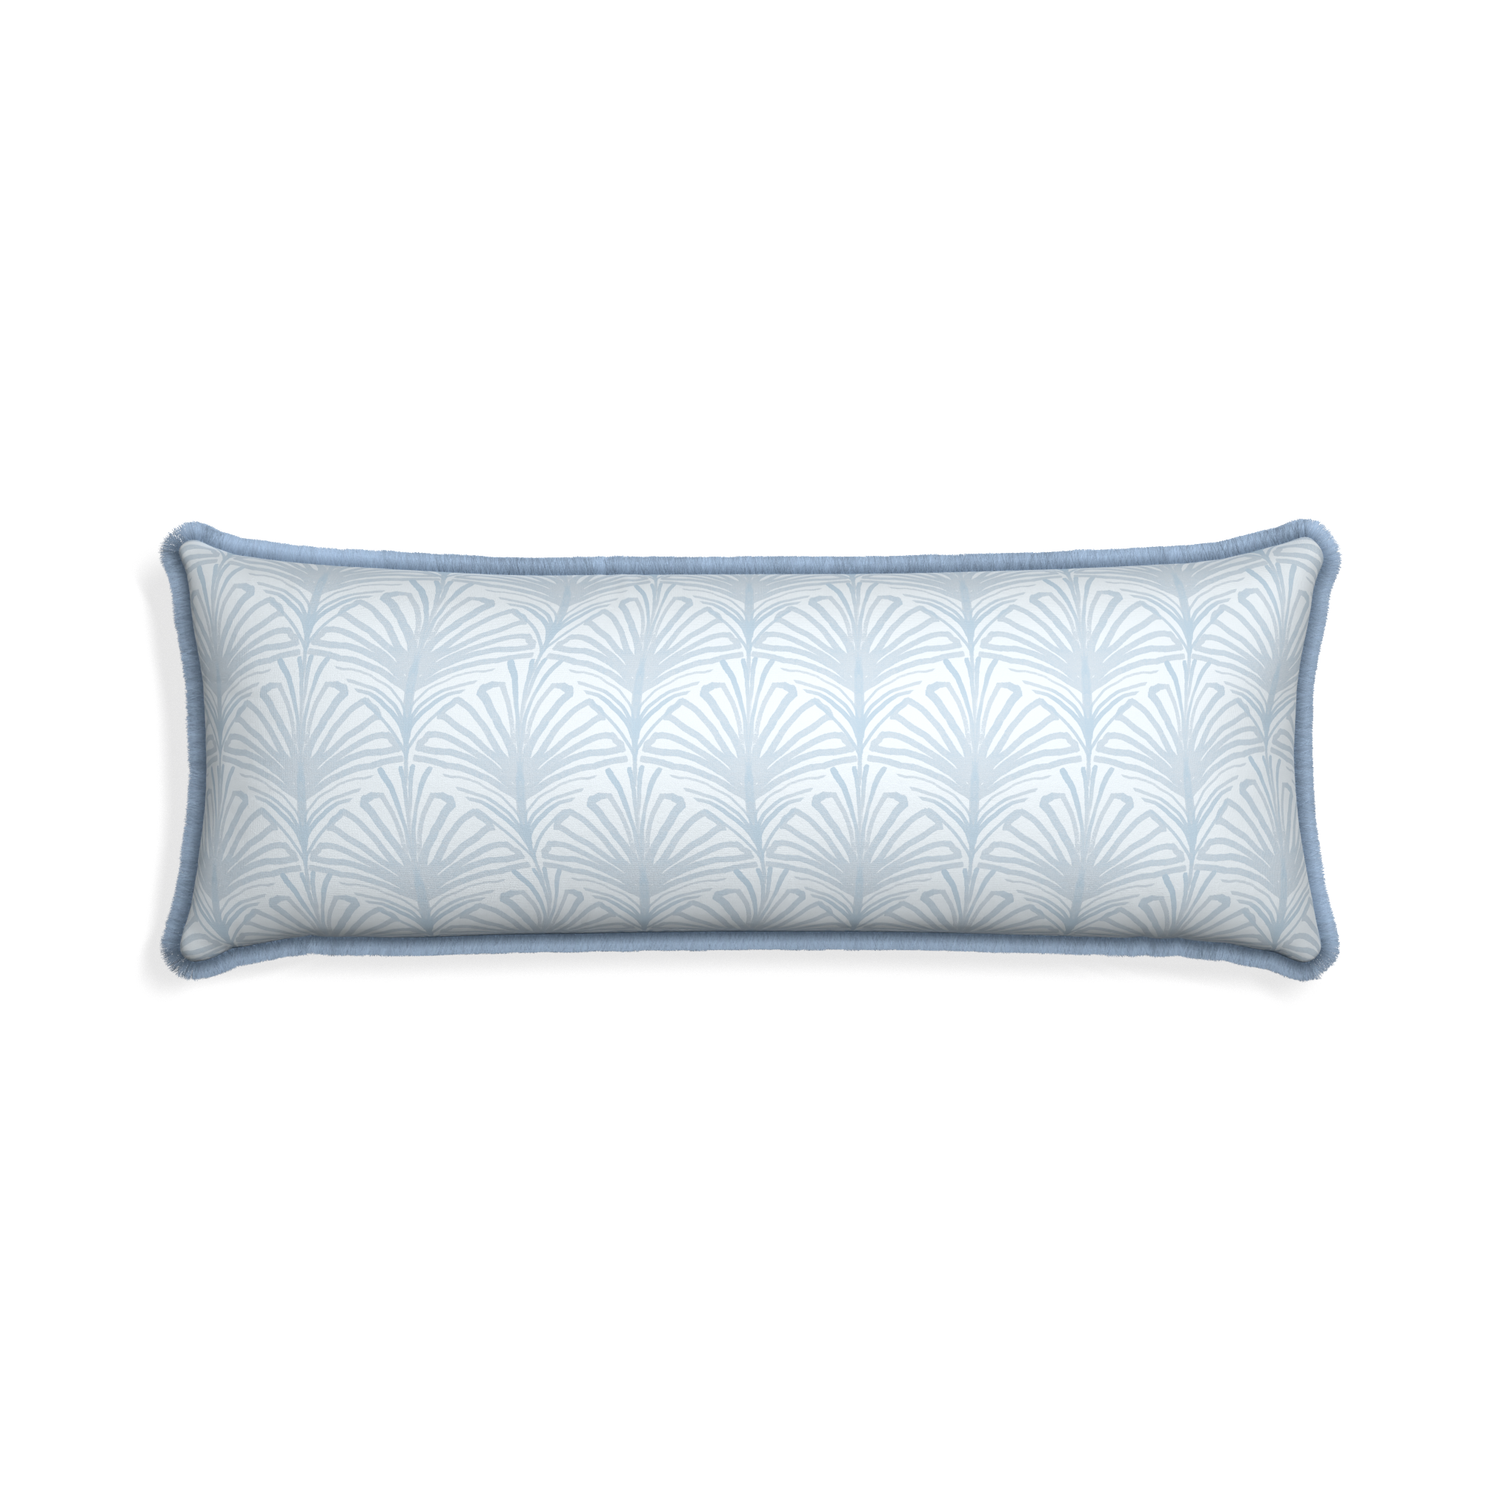 Xl-lumbar suzy sky custom pillow with sky fringe on white background